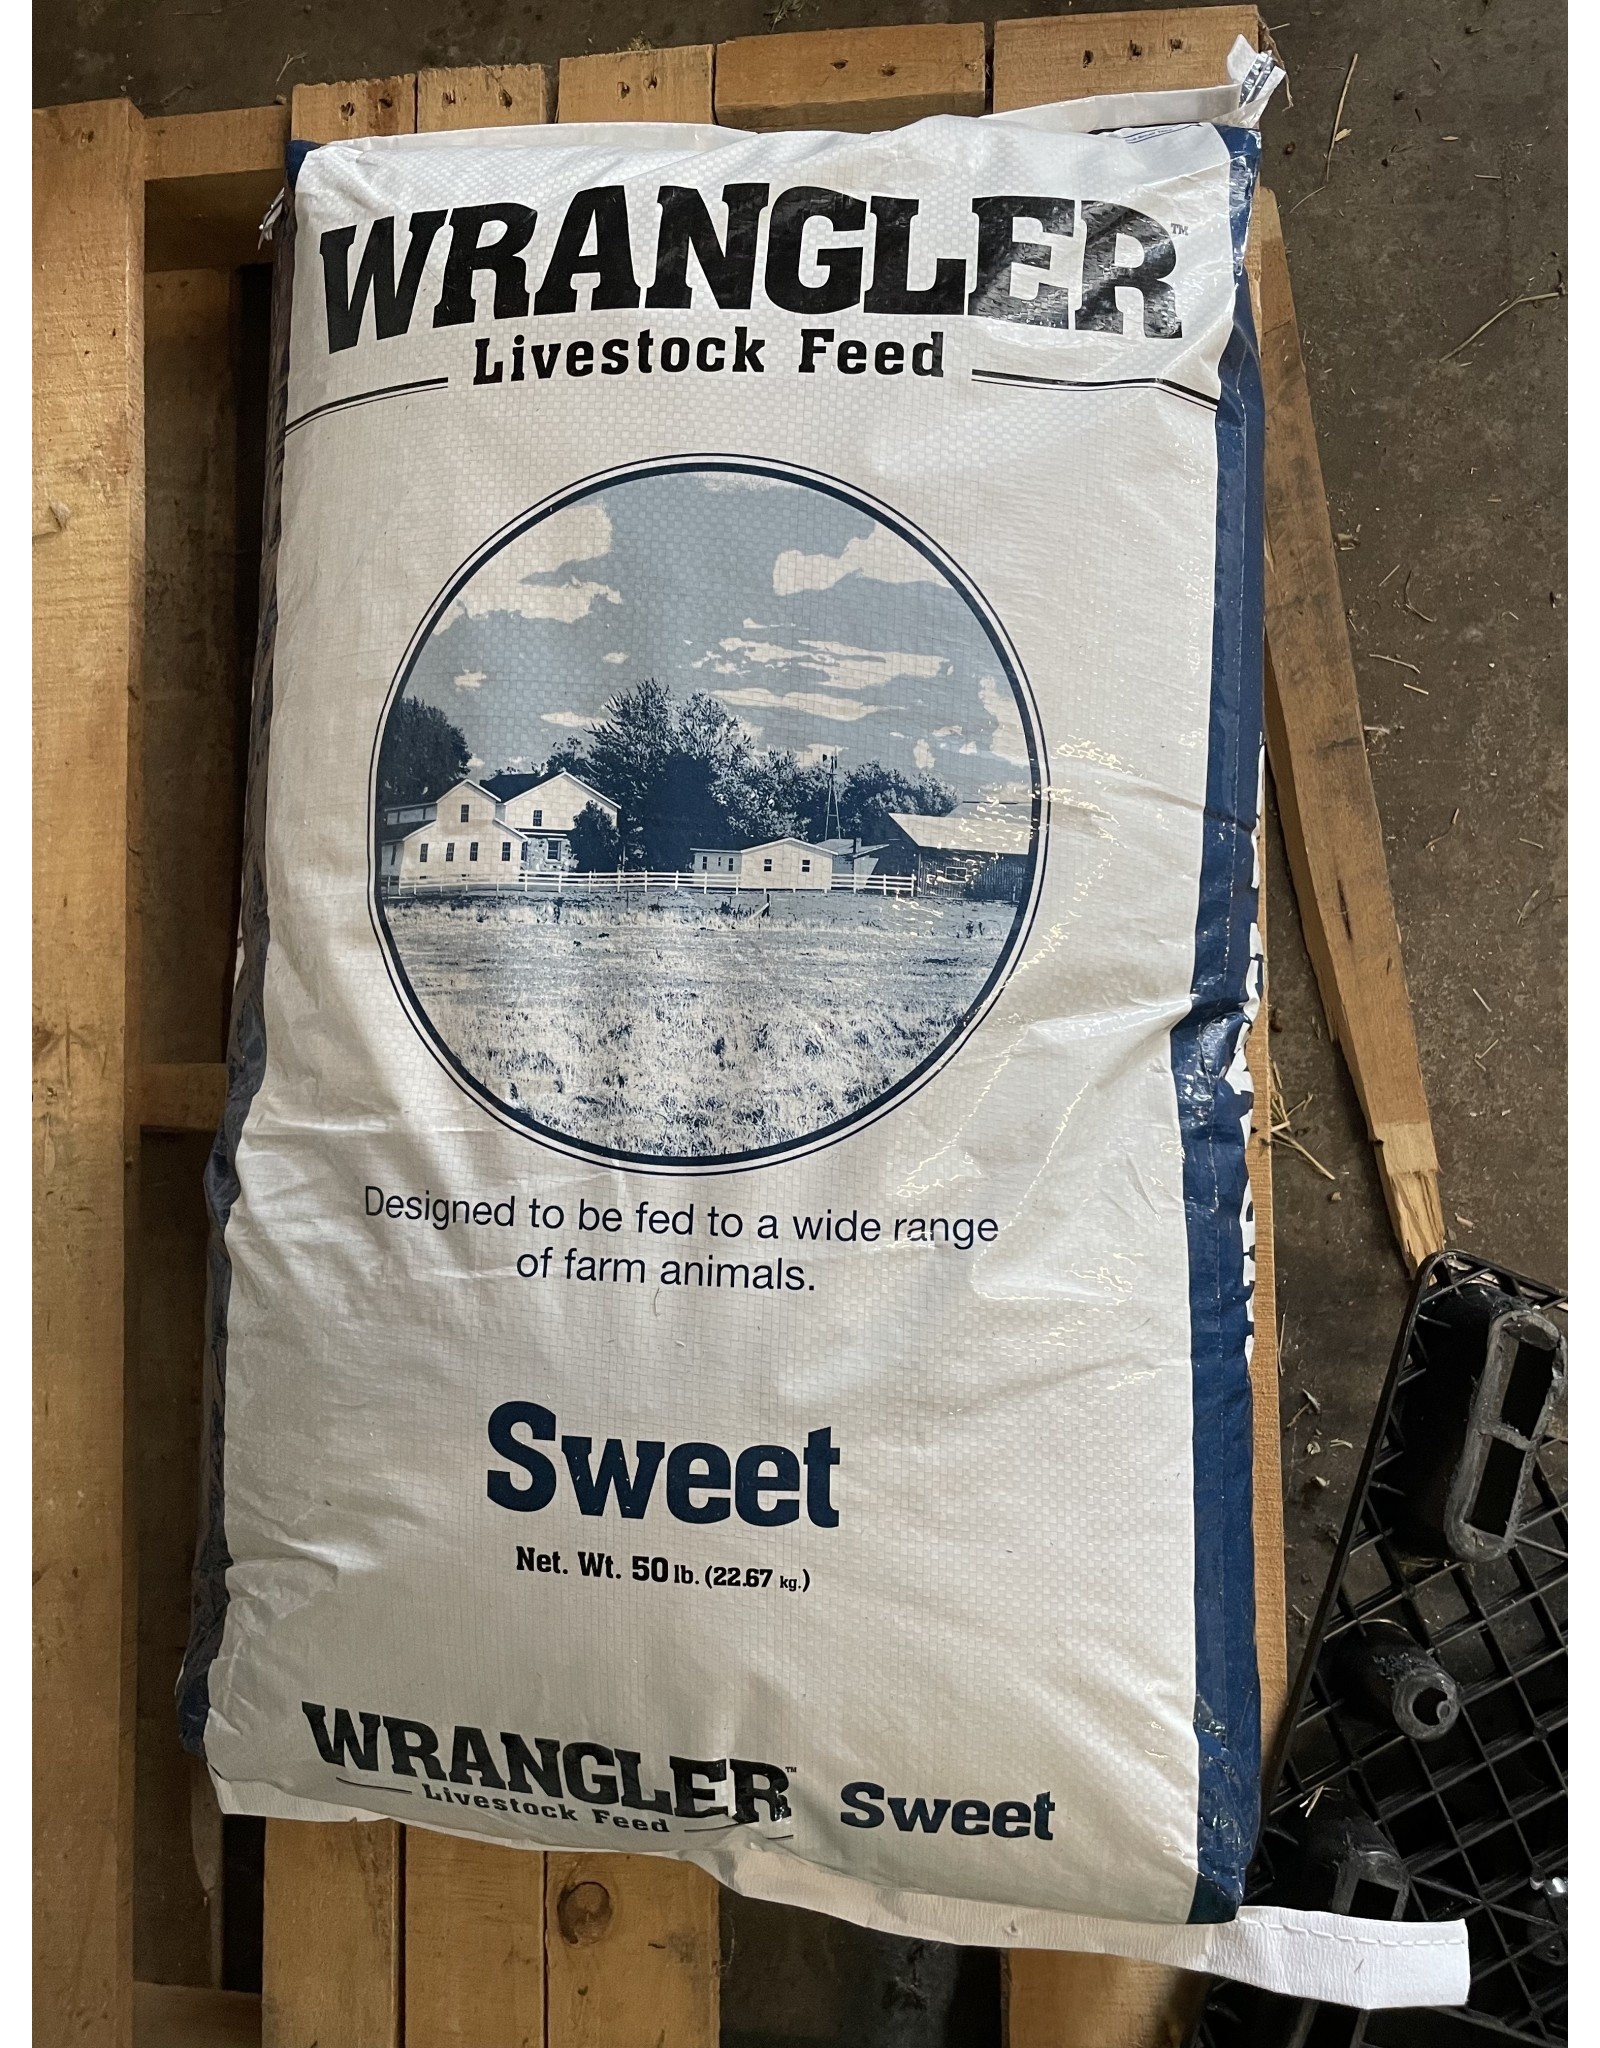 Wrangler 11% Sweet - Sweet Cypress Ranch, Inc